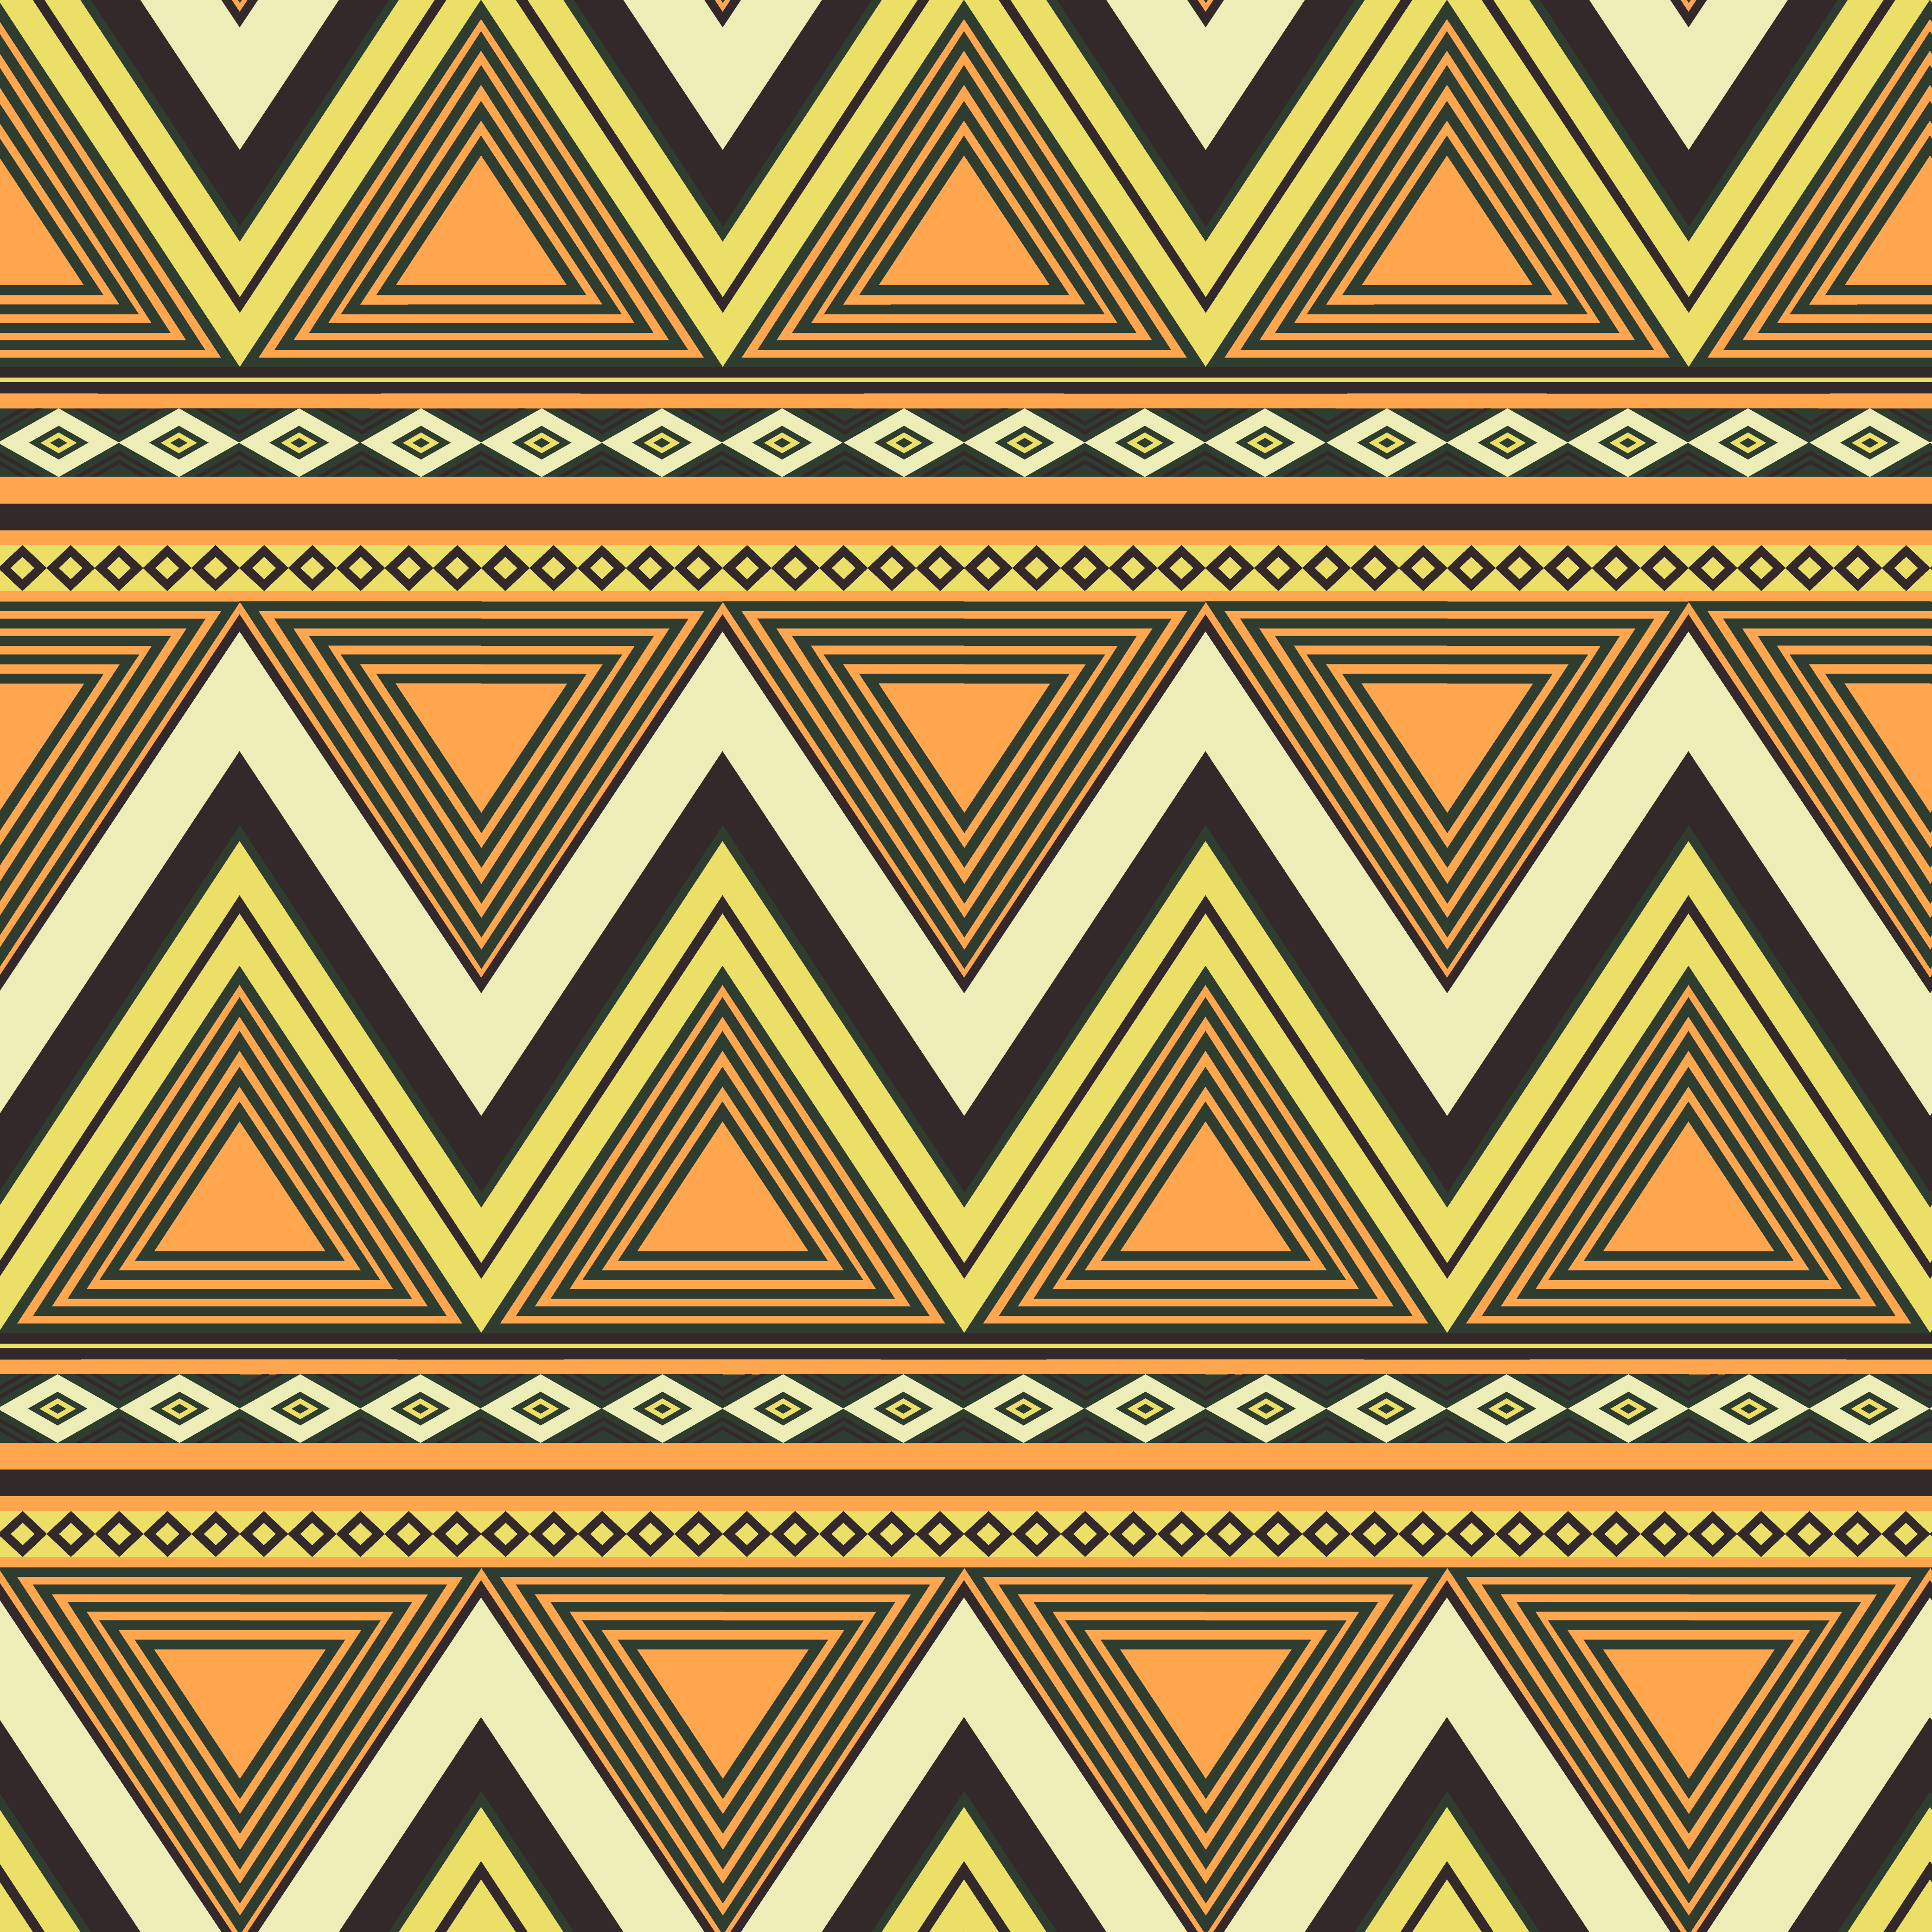 Geometric African Pattern Design by Adina Dedu 669362.